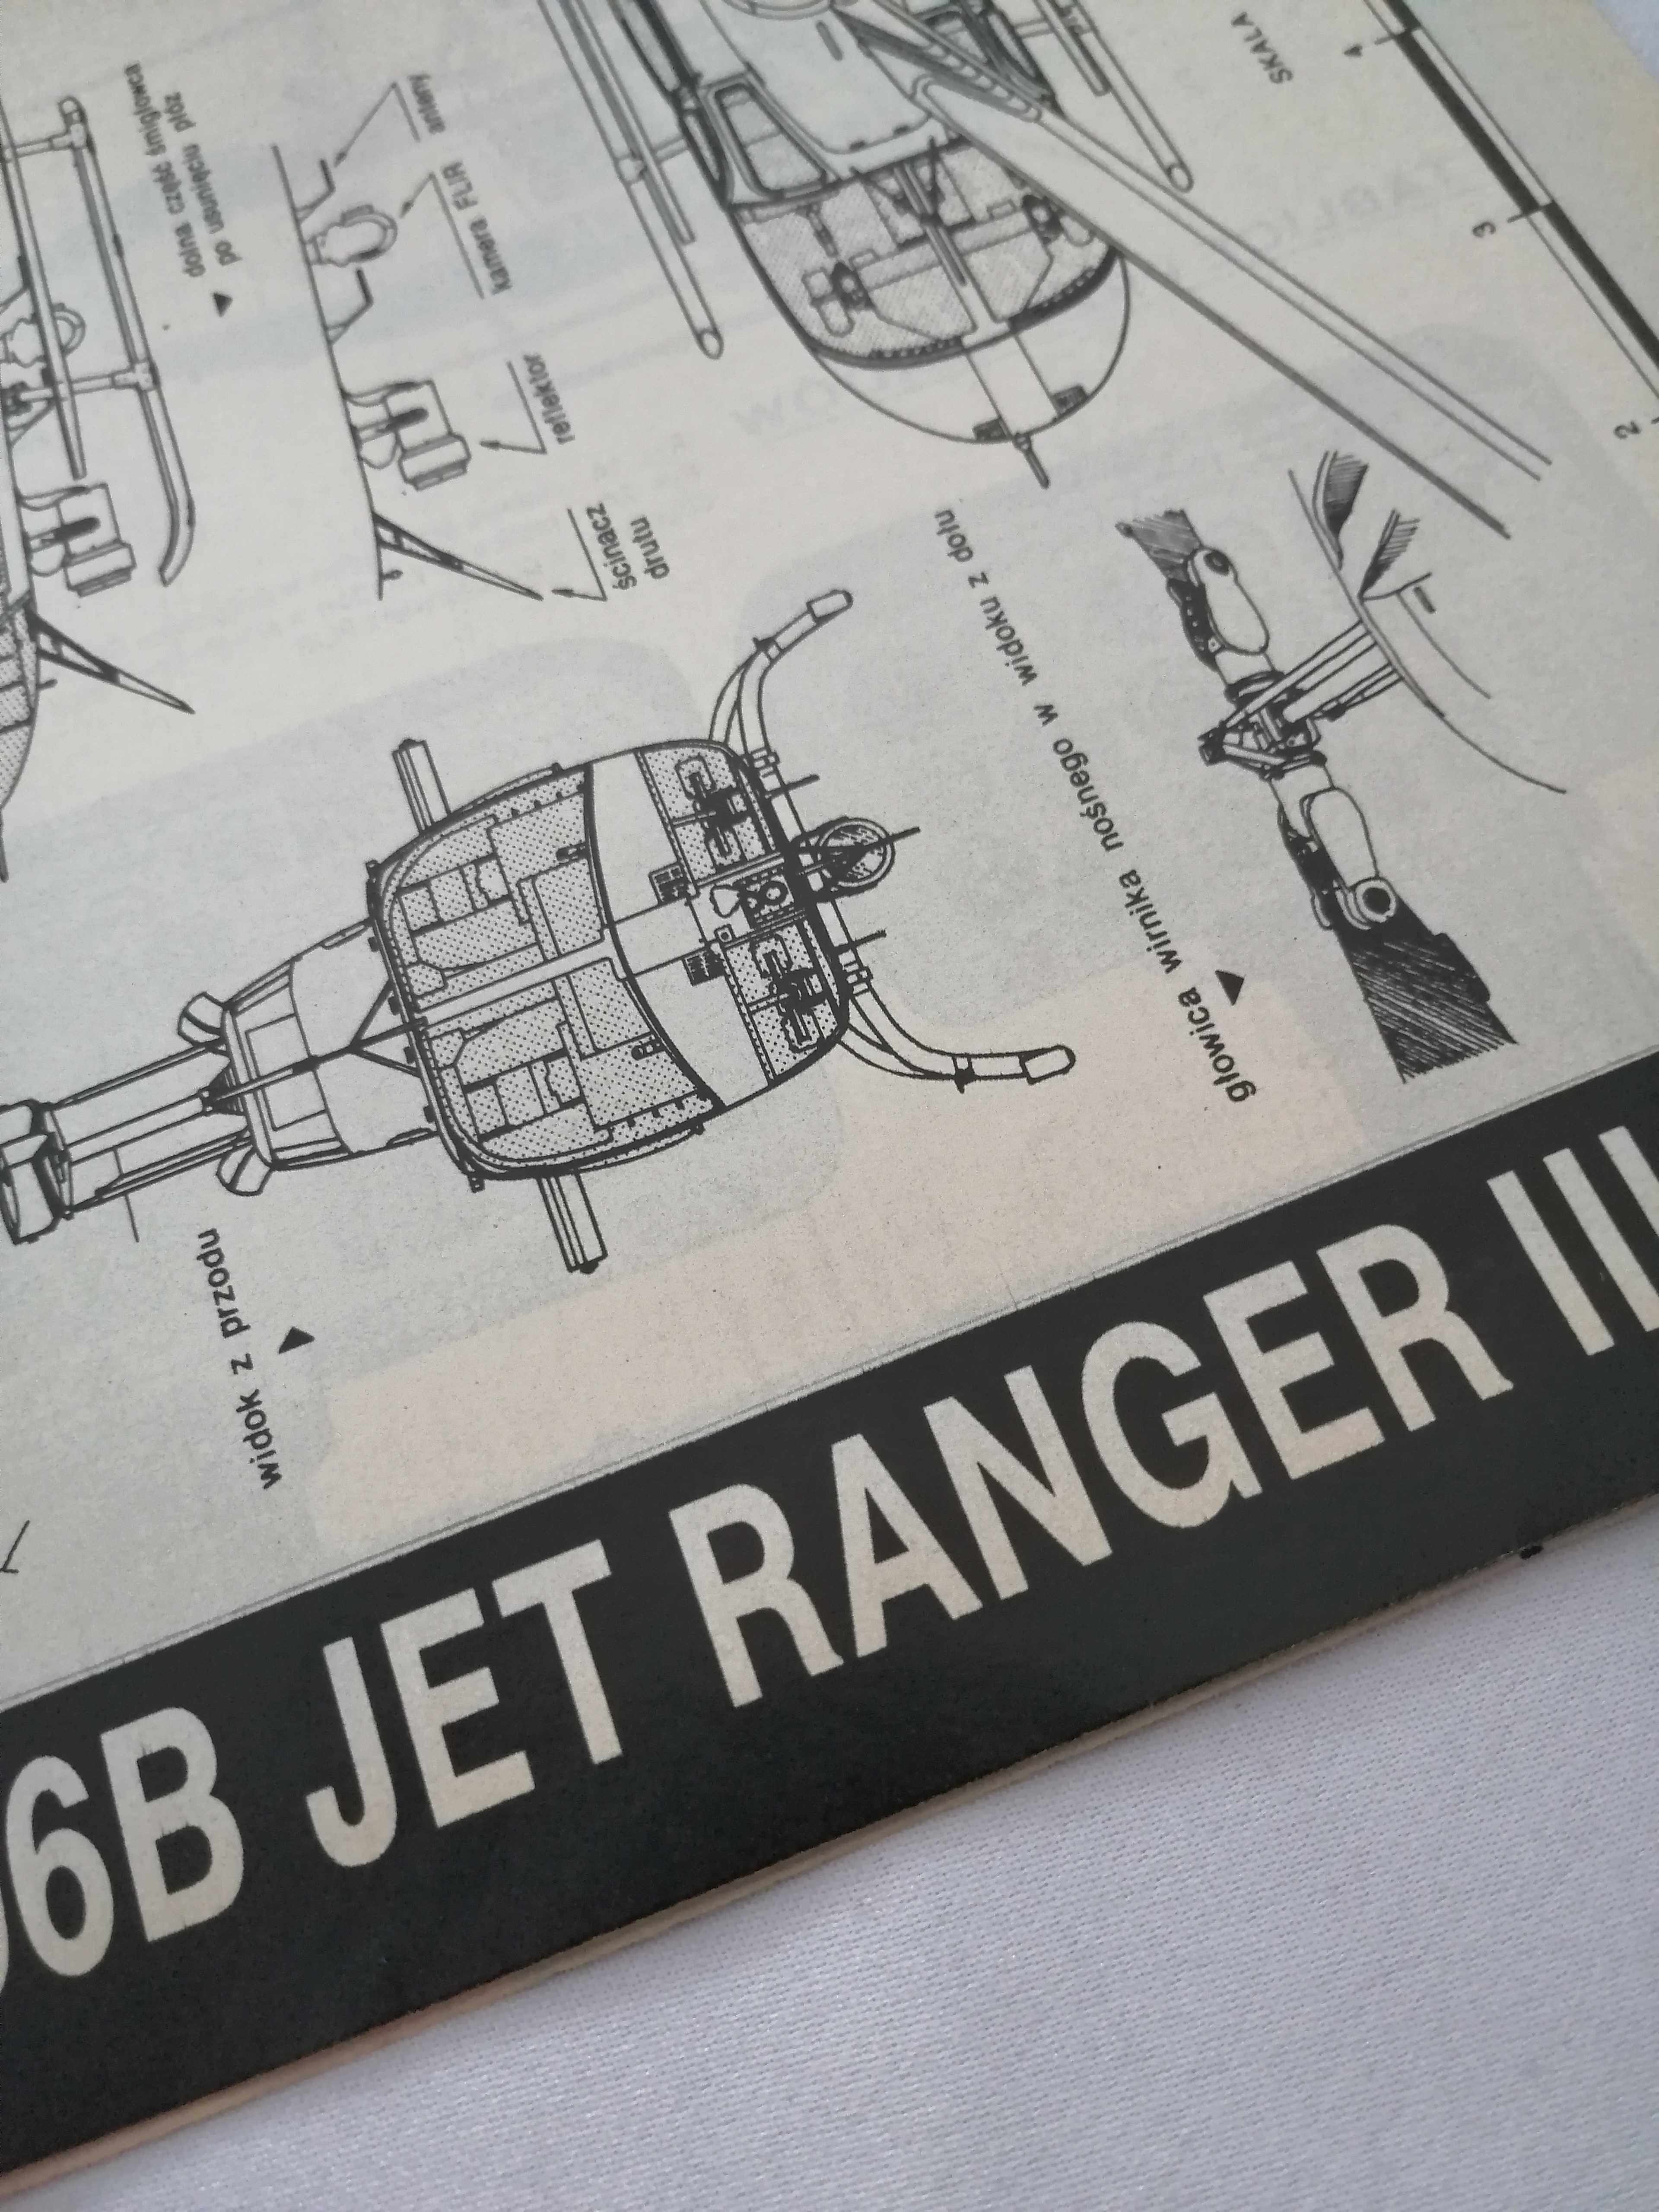 Bell Jet Ranger smiglowiec Mucha szybowiec PZL-P11C Modelarz 6 1994